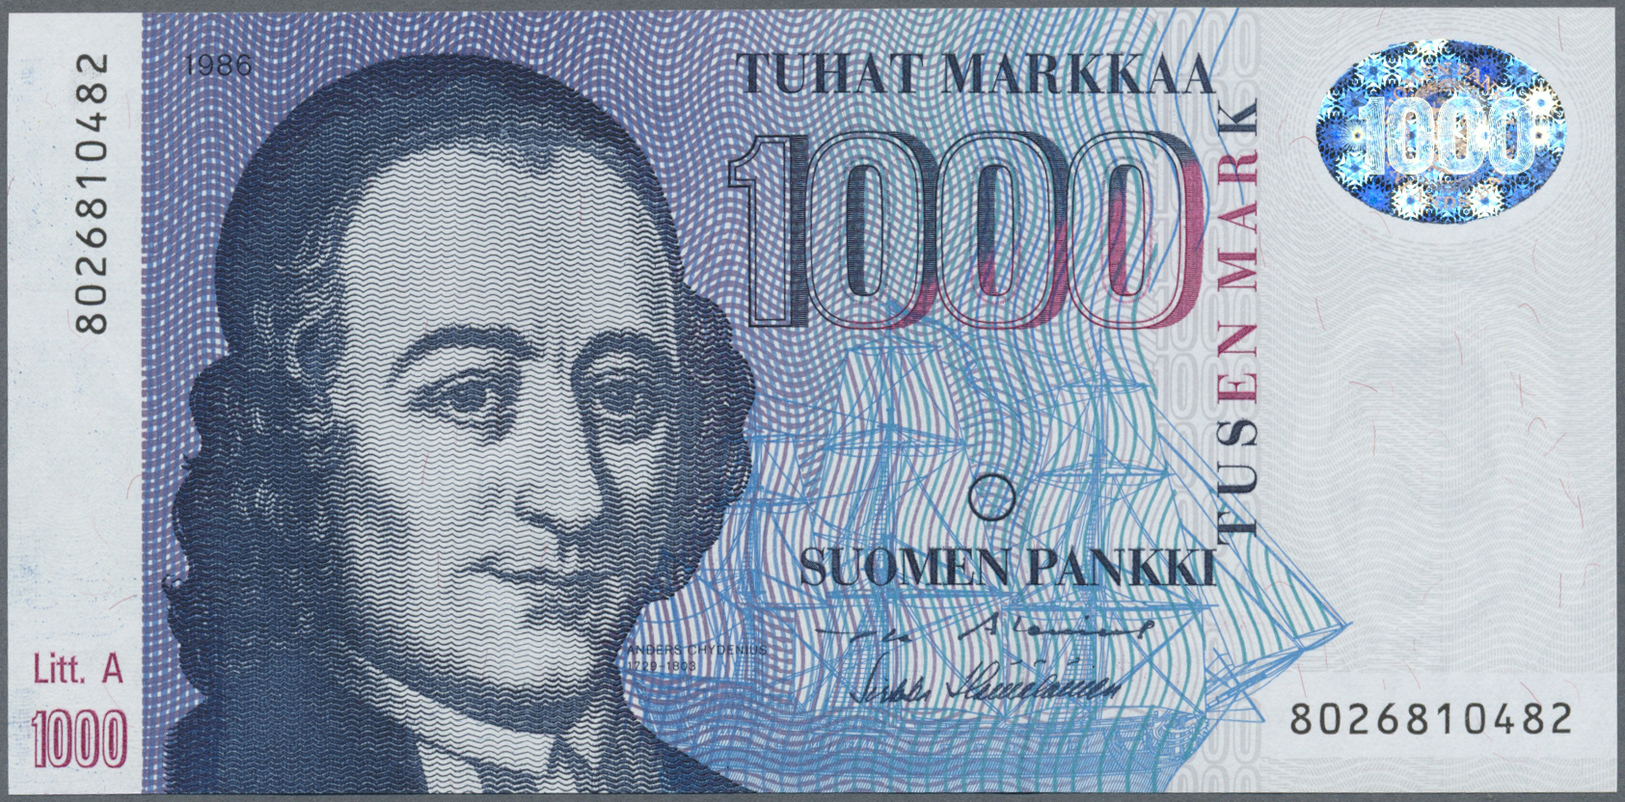 00799 Finland / Finnland: 1000 Markkaa 1986 P. 121 In Condition: UNC. - Finland